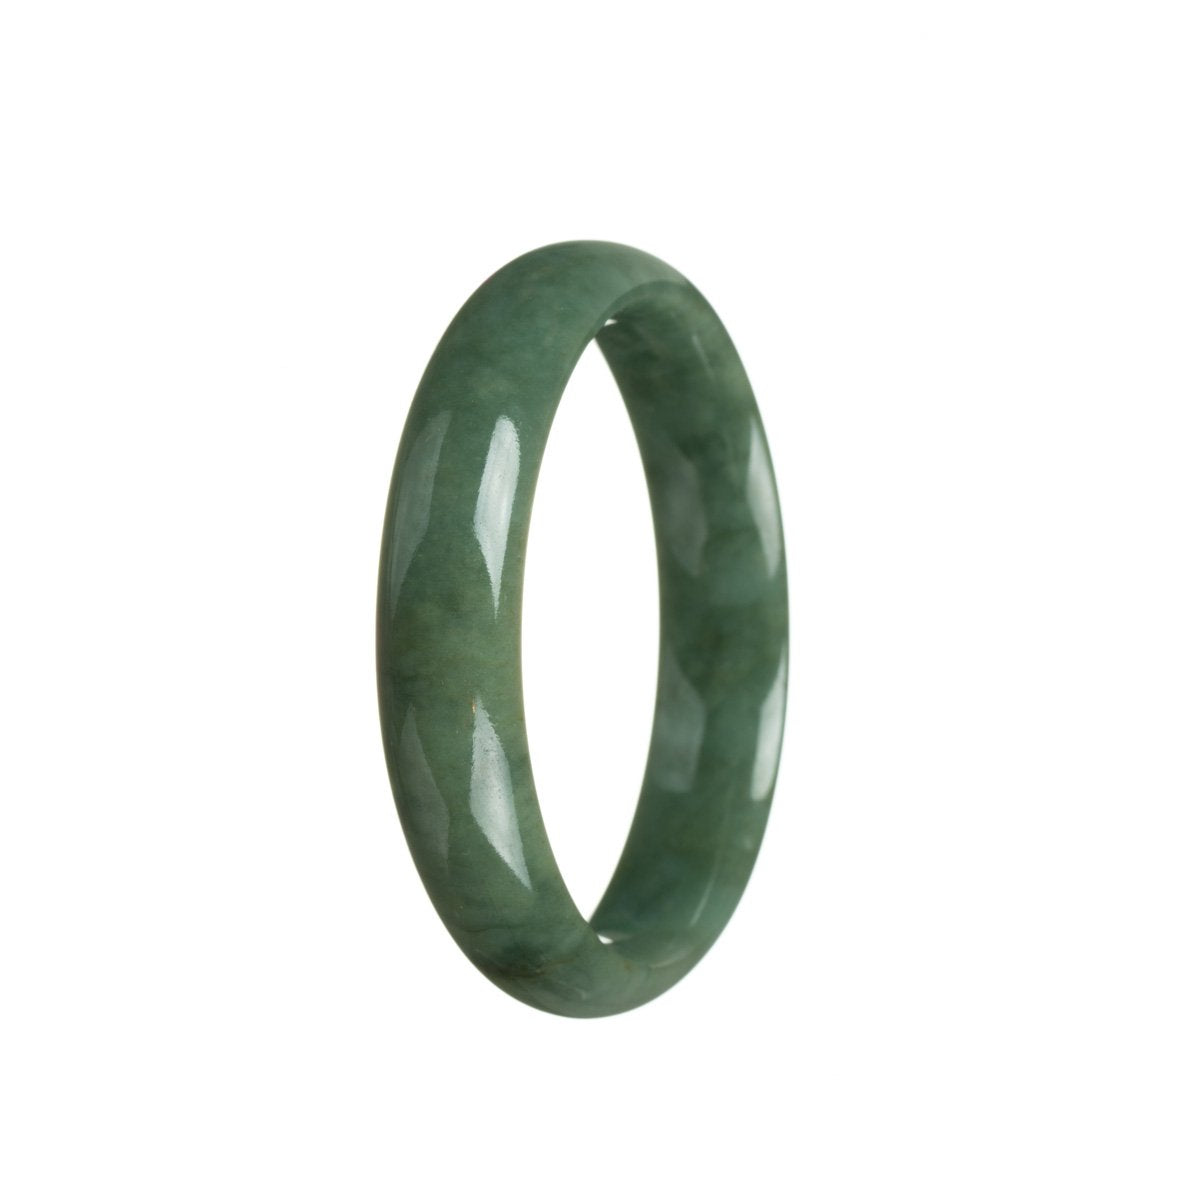 A half moon-shaped deep green jade bangle, featuring a genuine natural stone.